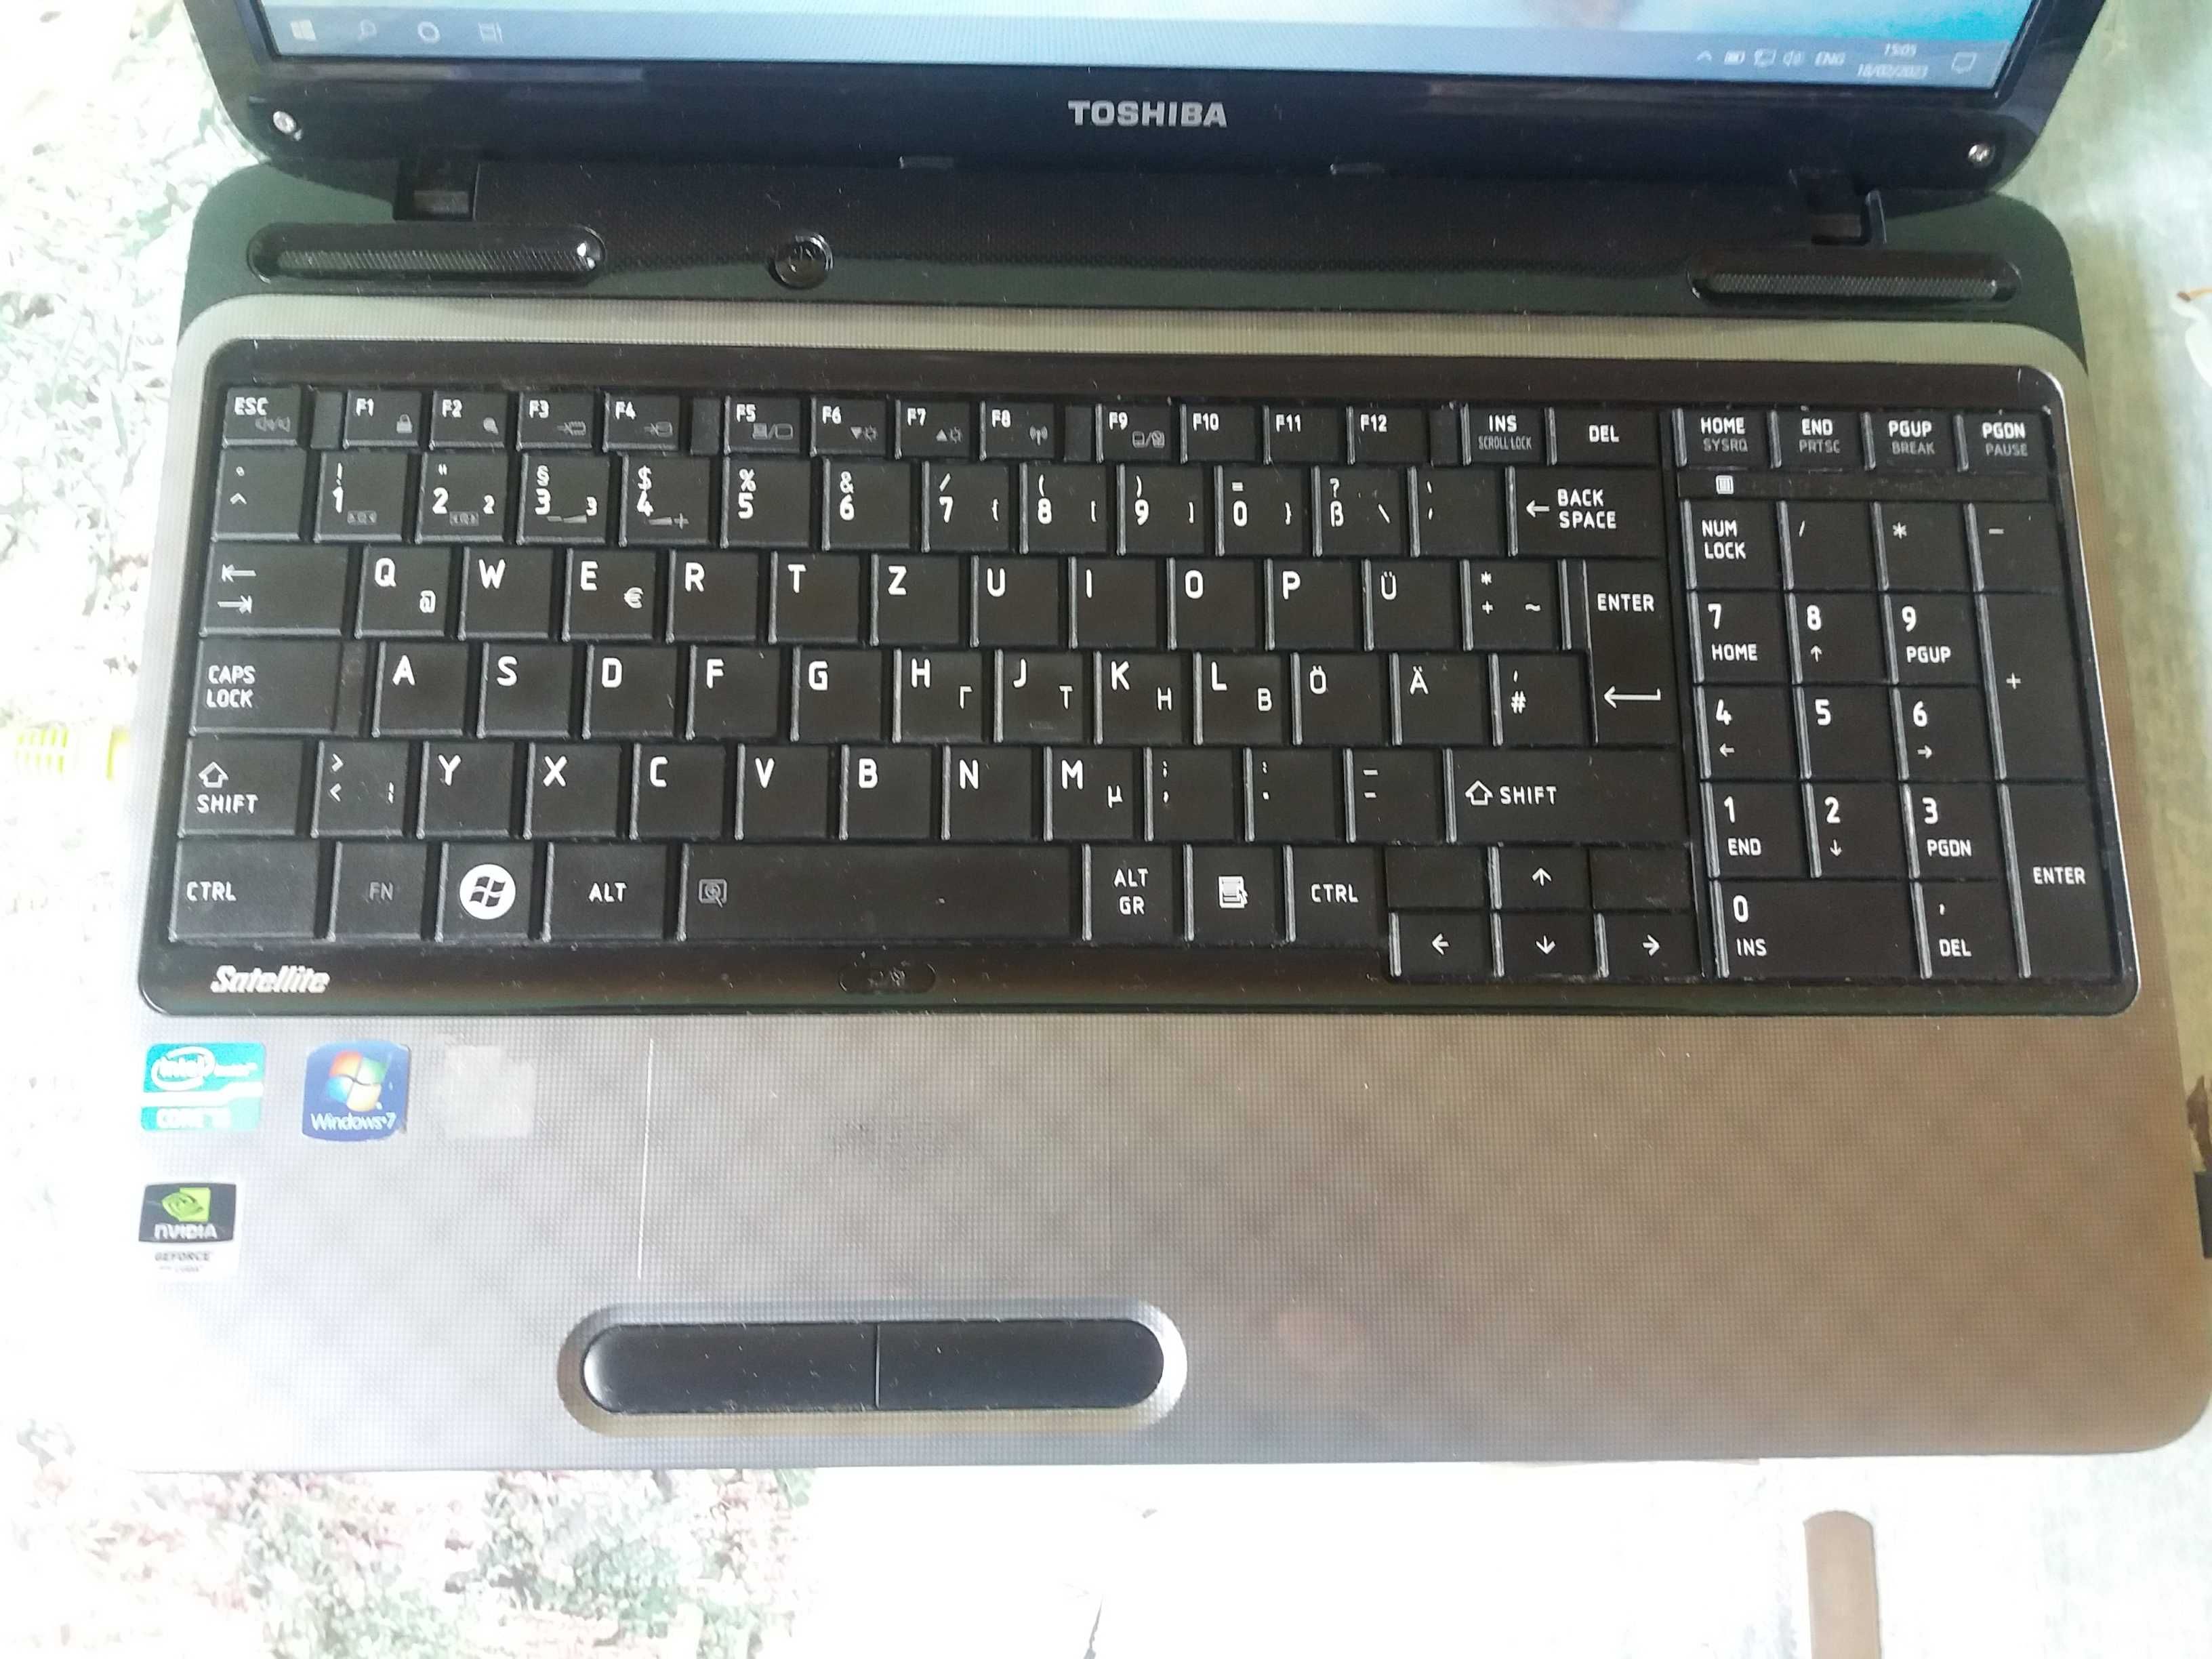 Геймърски лаптоп Toshiba Gaming Laptop, Intel i5, Nvidia GT525 2gb